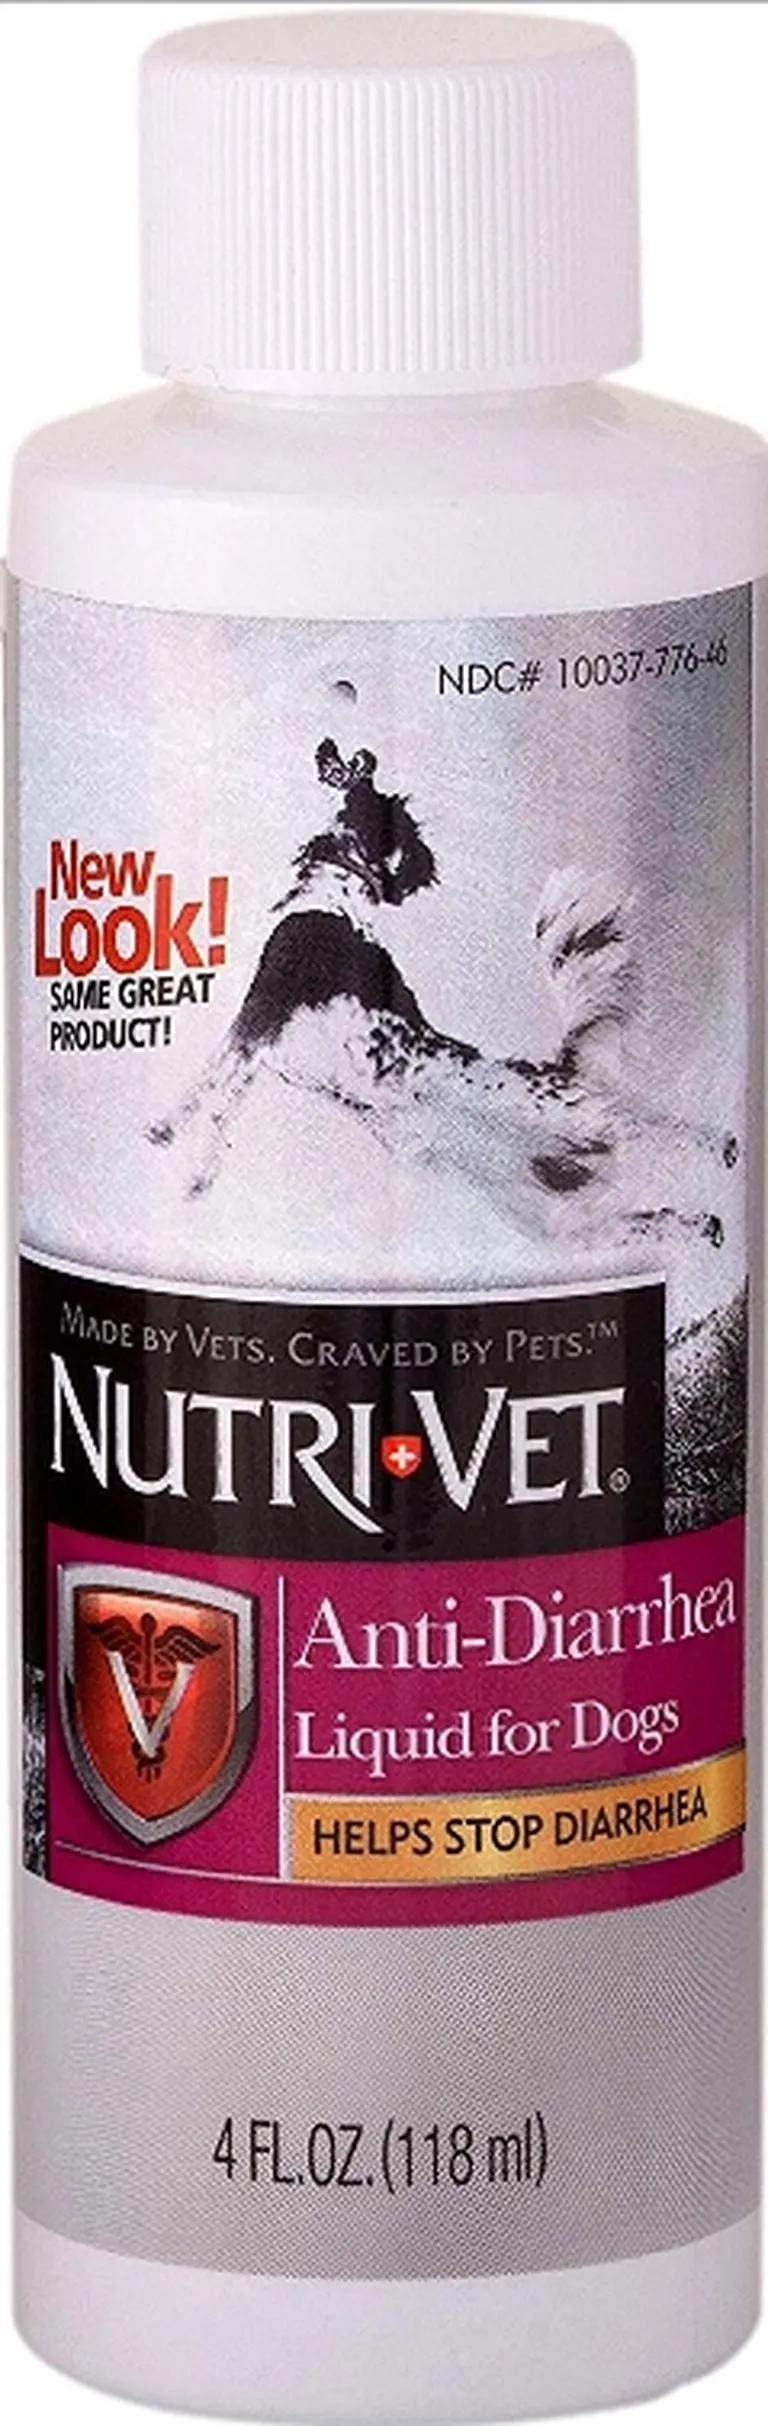 Nutri Vet Wellness Anti Diarrhea Liquid Photo 2